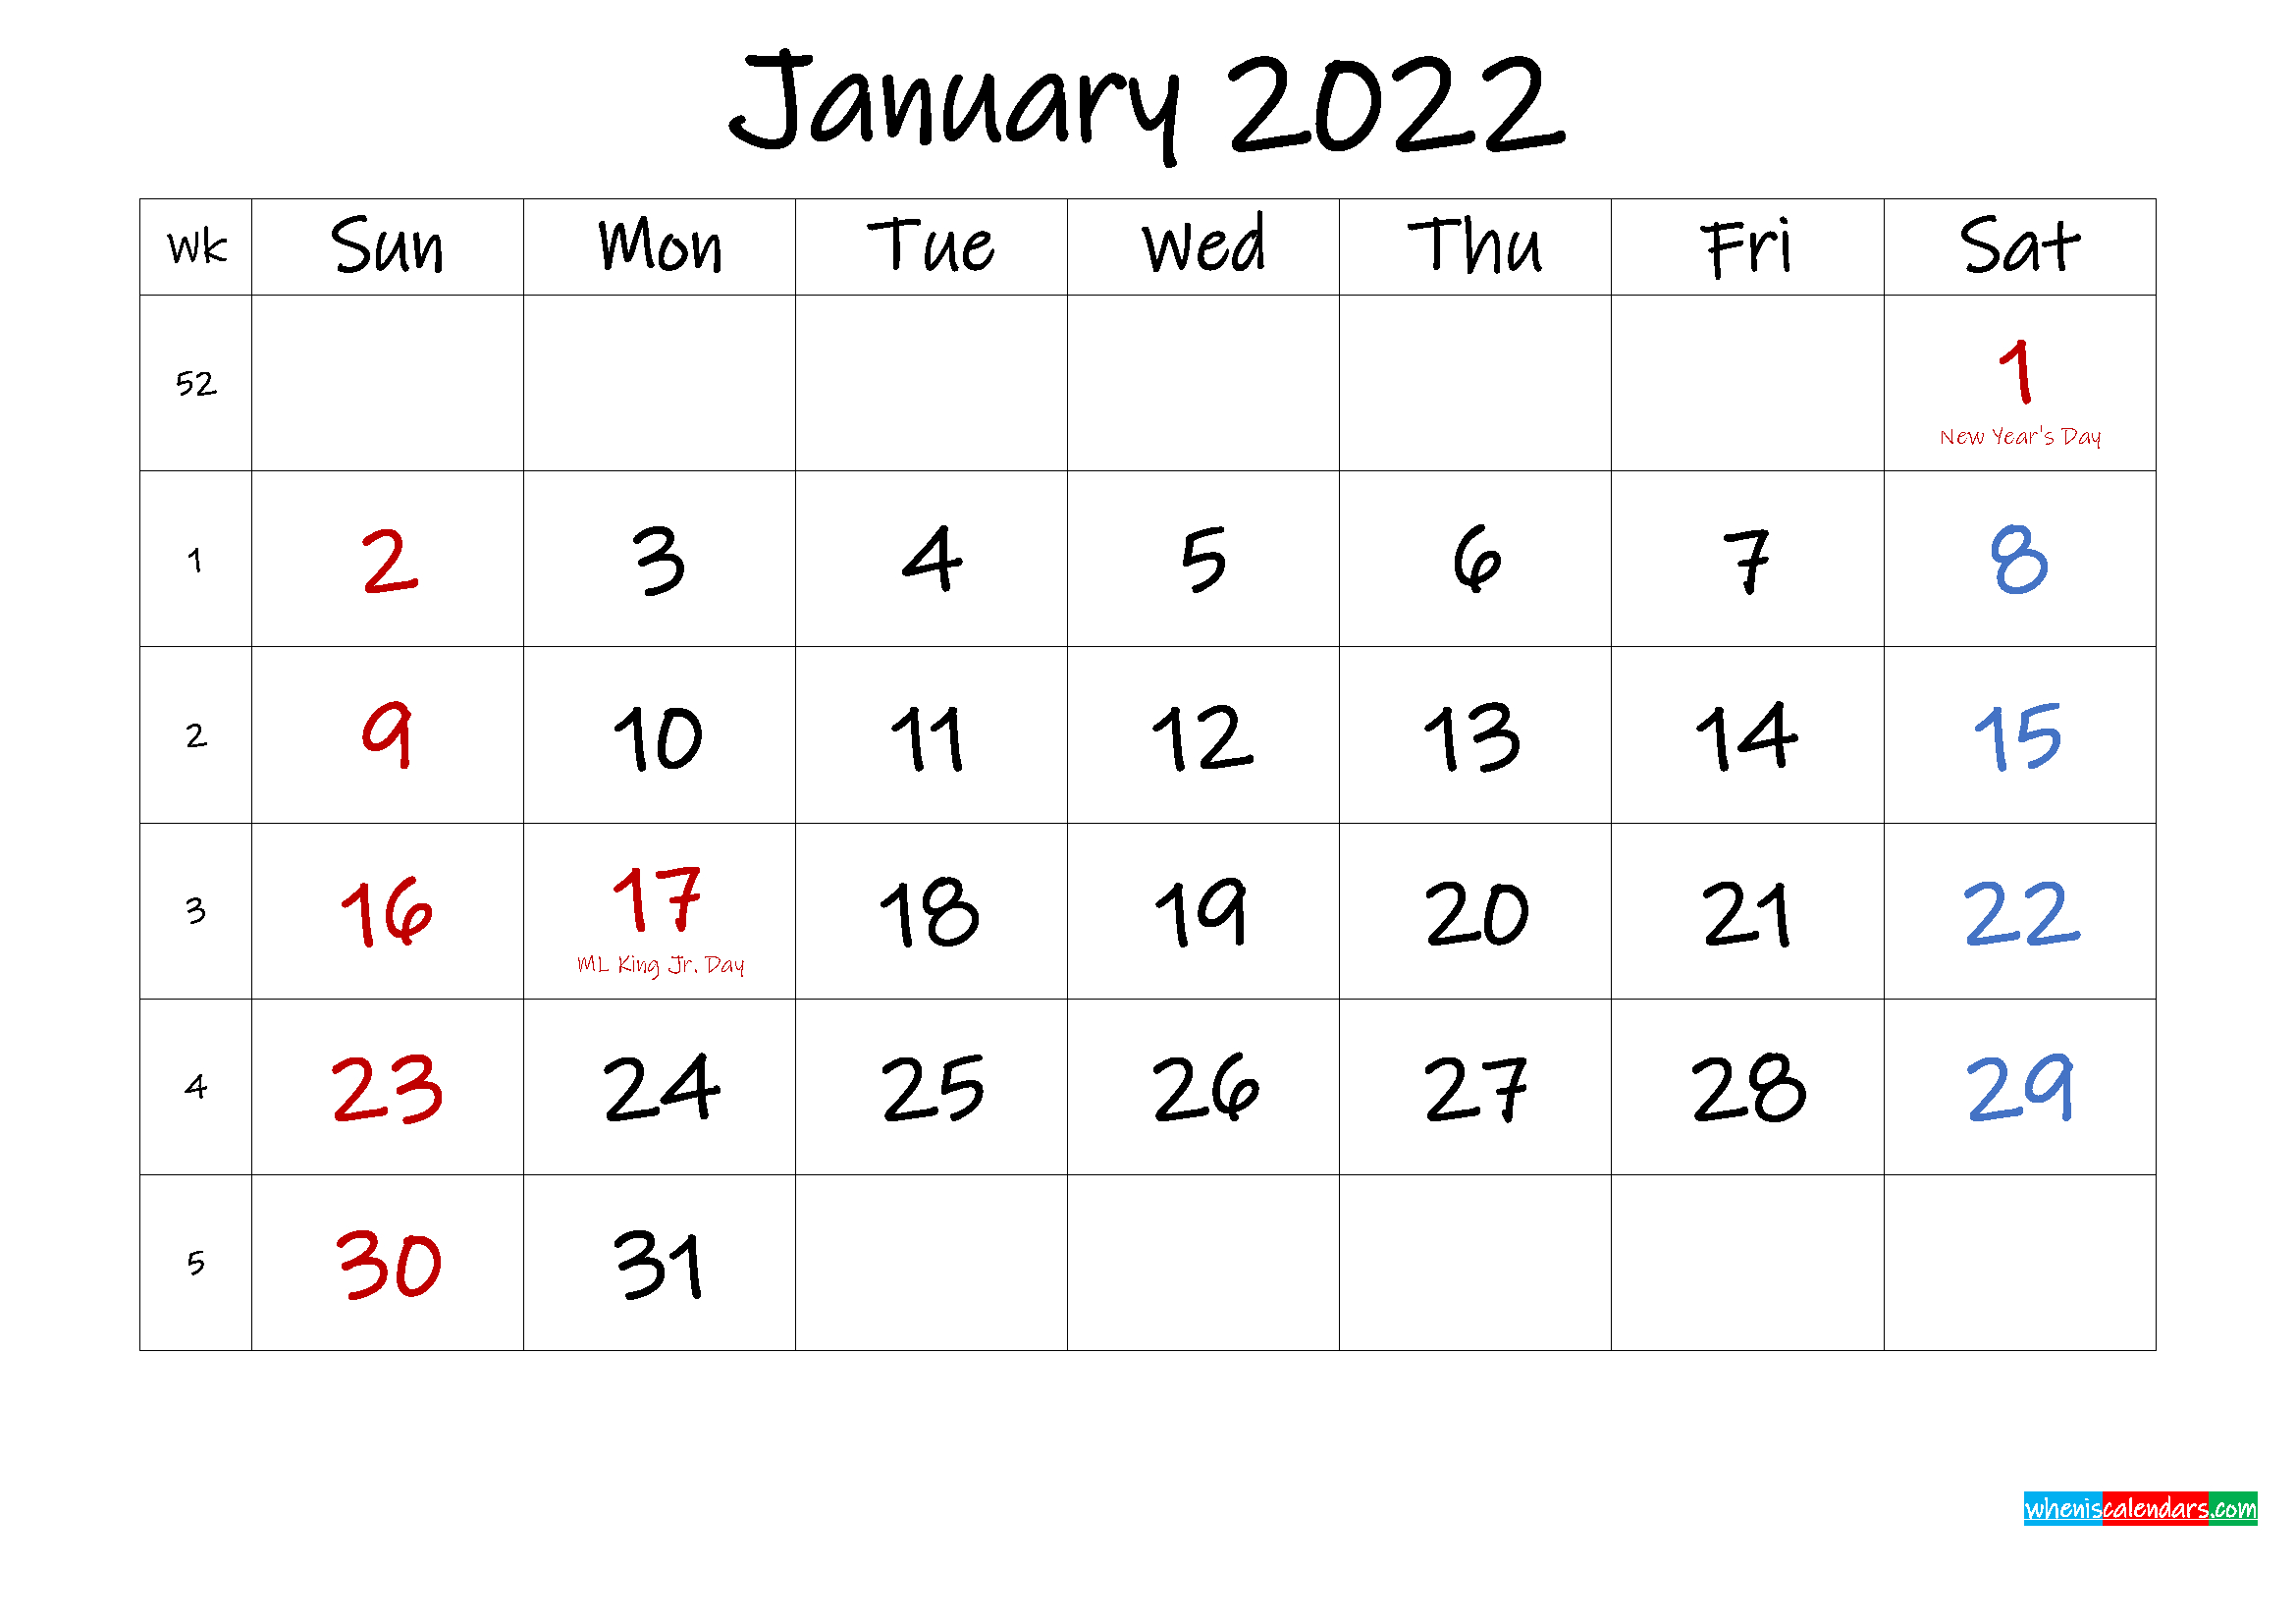 January 2022 Free Printable Calendar With Holidays  A Calendar For 2022